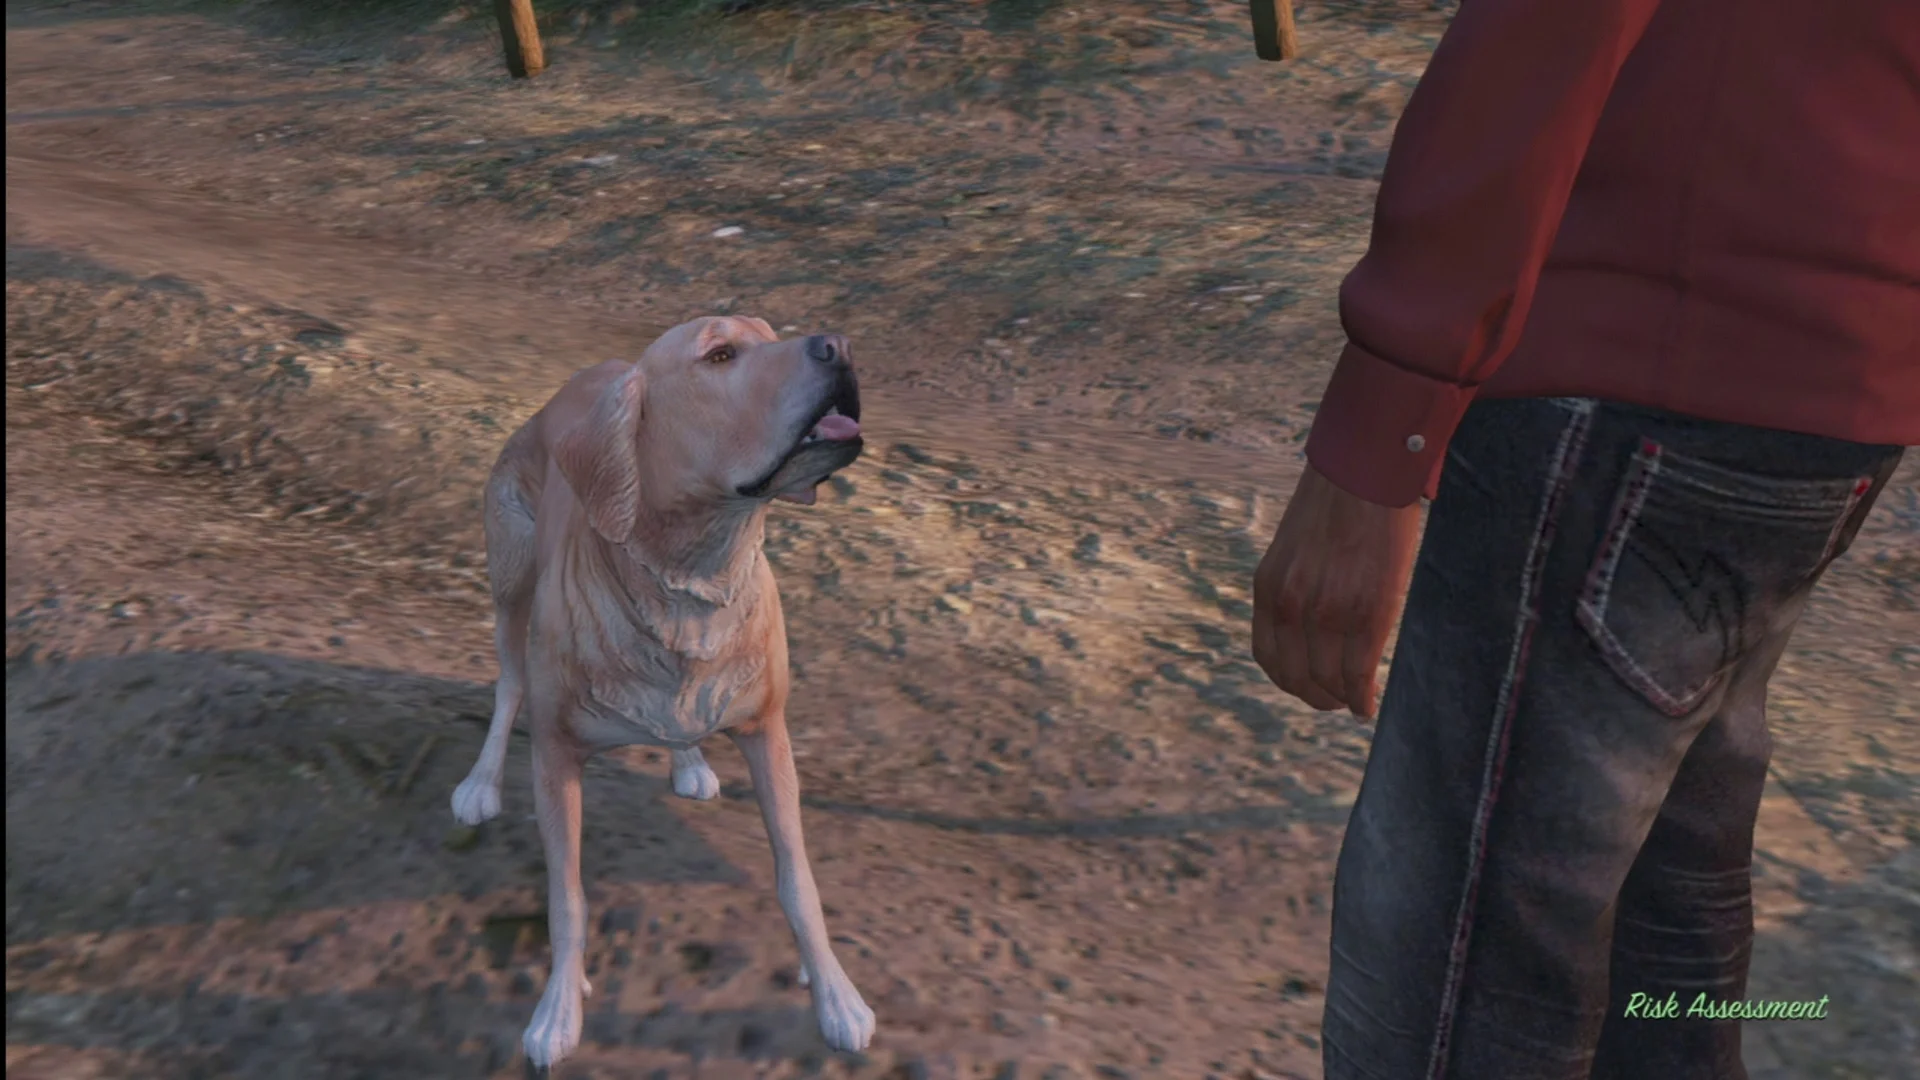 Гифка дня: милая и невозмутимая собачка в Grand Theft Auto V - фото 1